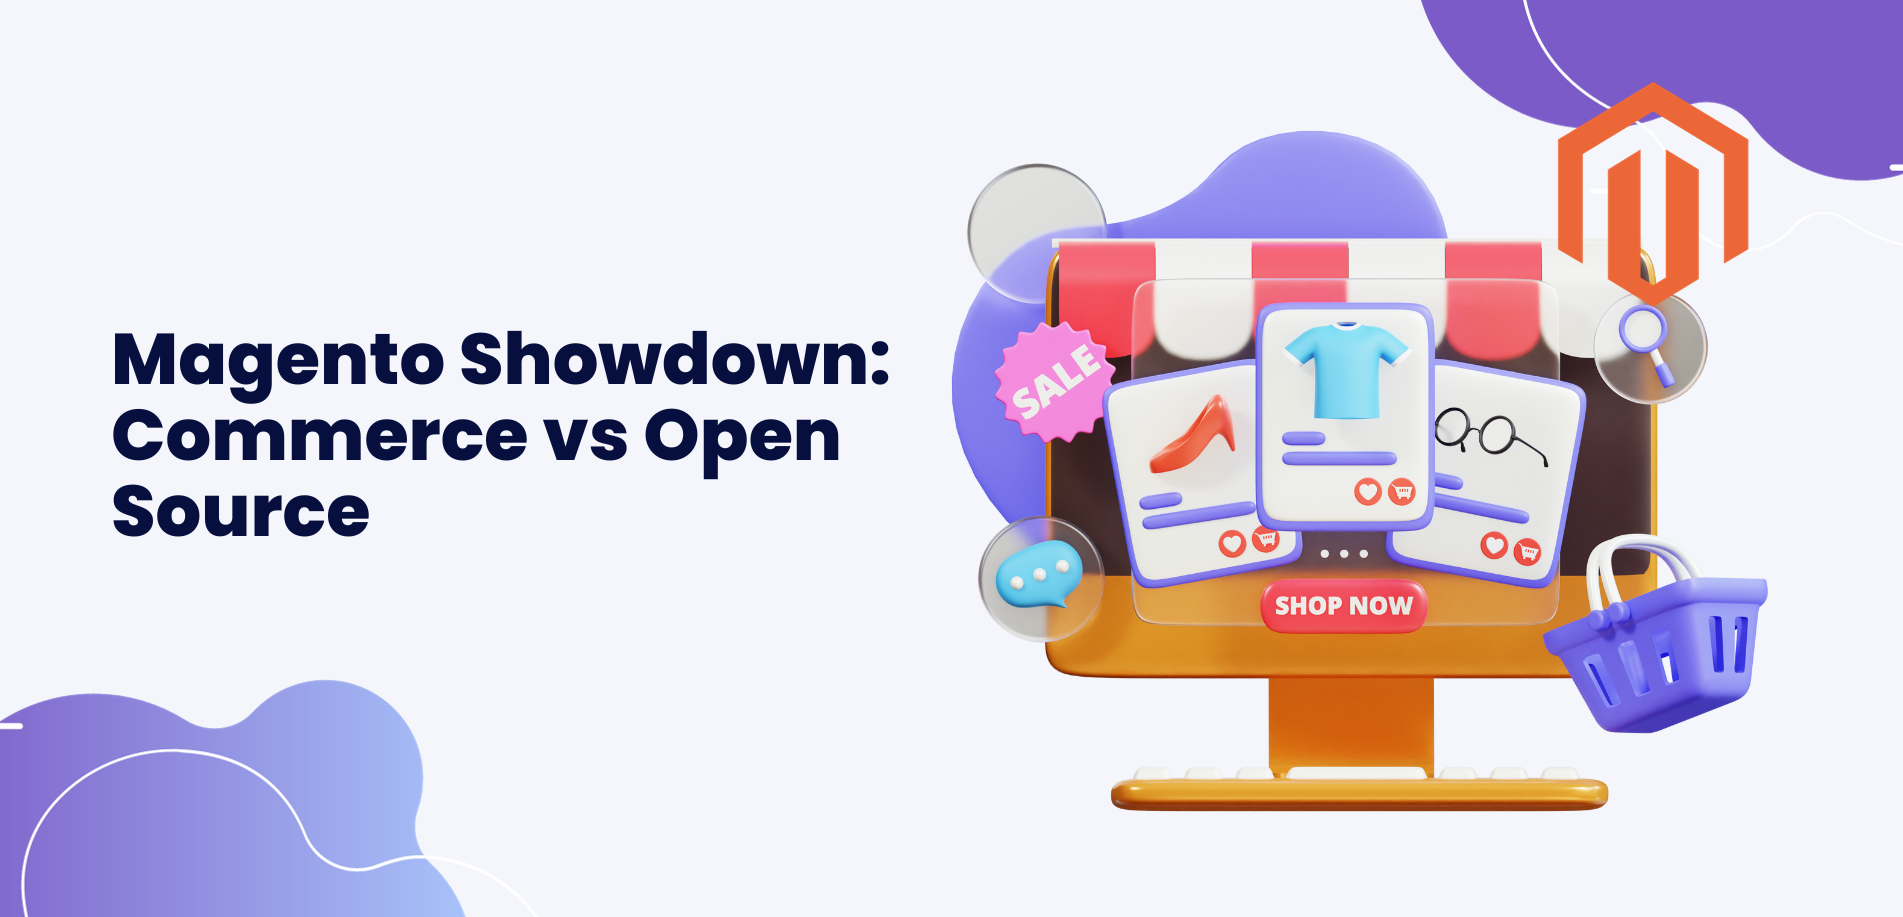 Magento Showdown: Commerce vs Open Source